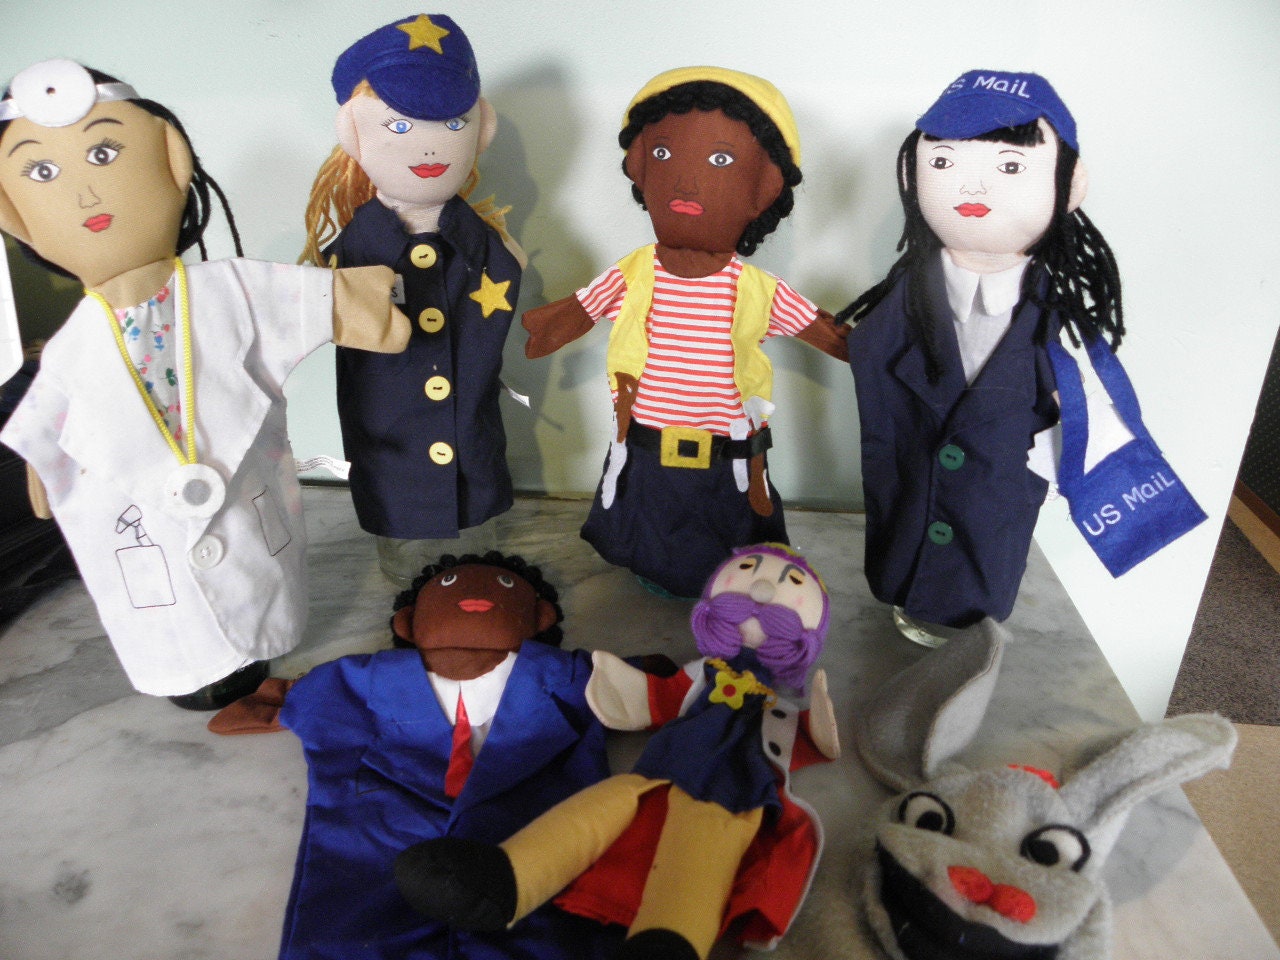 Diversity Puppets - Set of 8